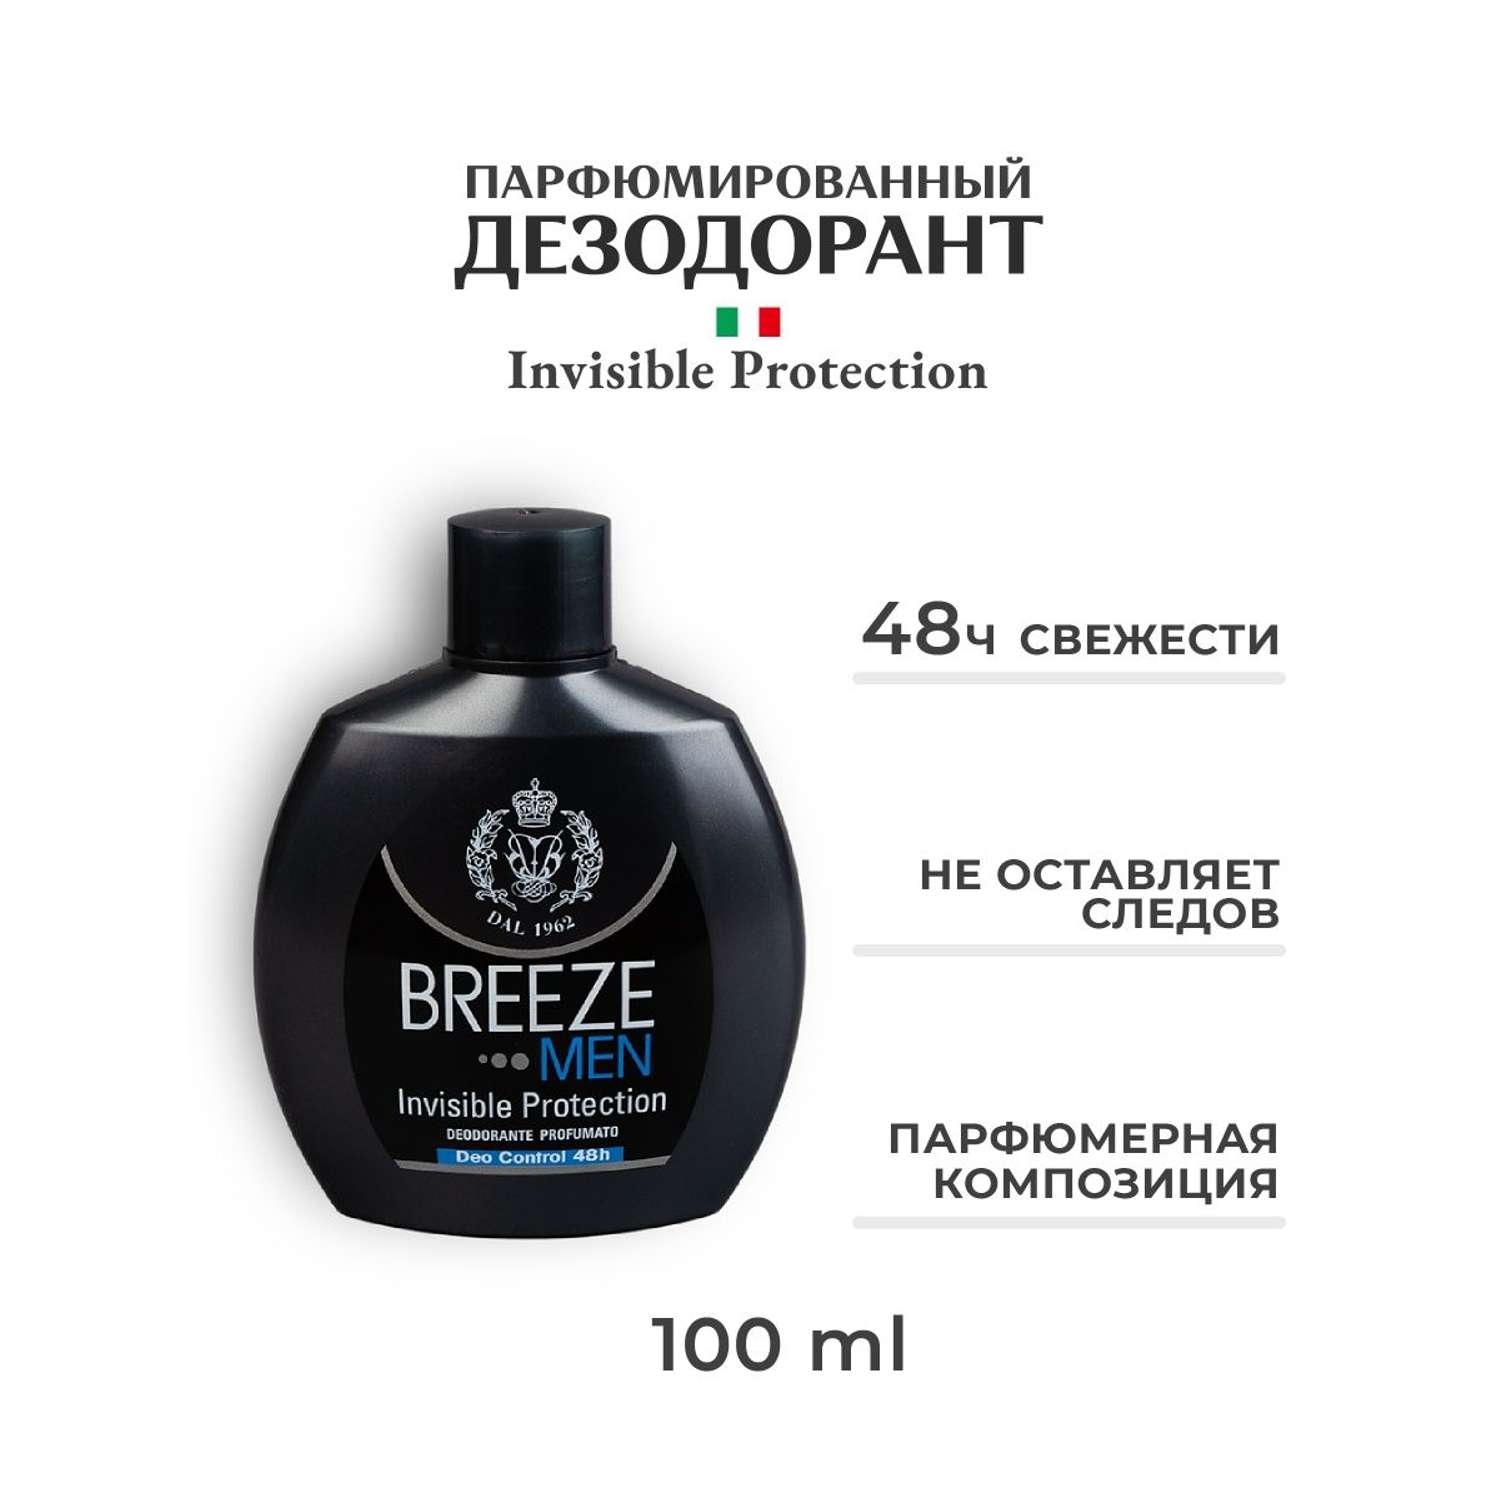 Парфюмированный дезодорант BREEZE invisible protection 100мл - фото 1